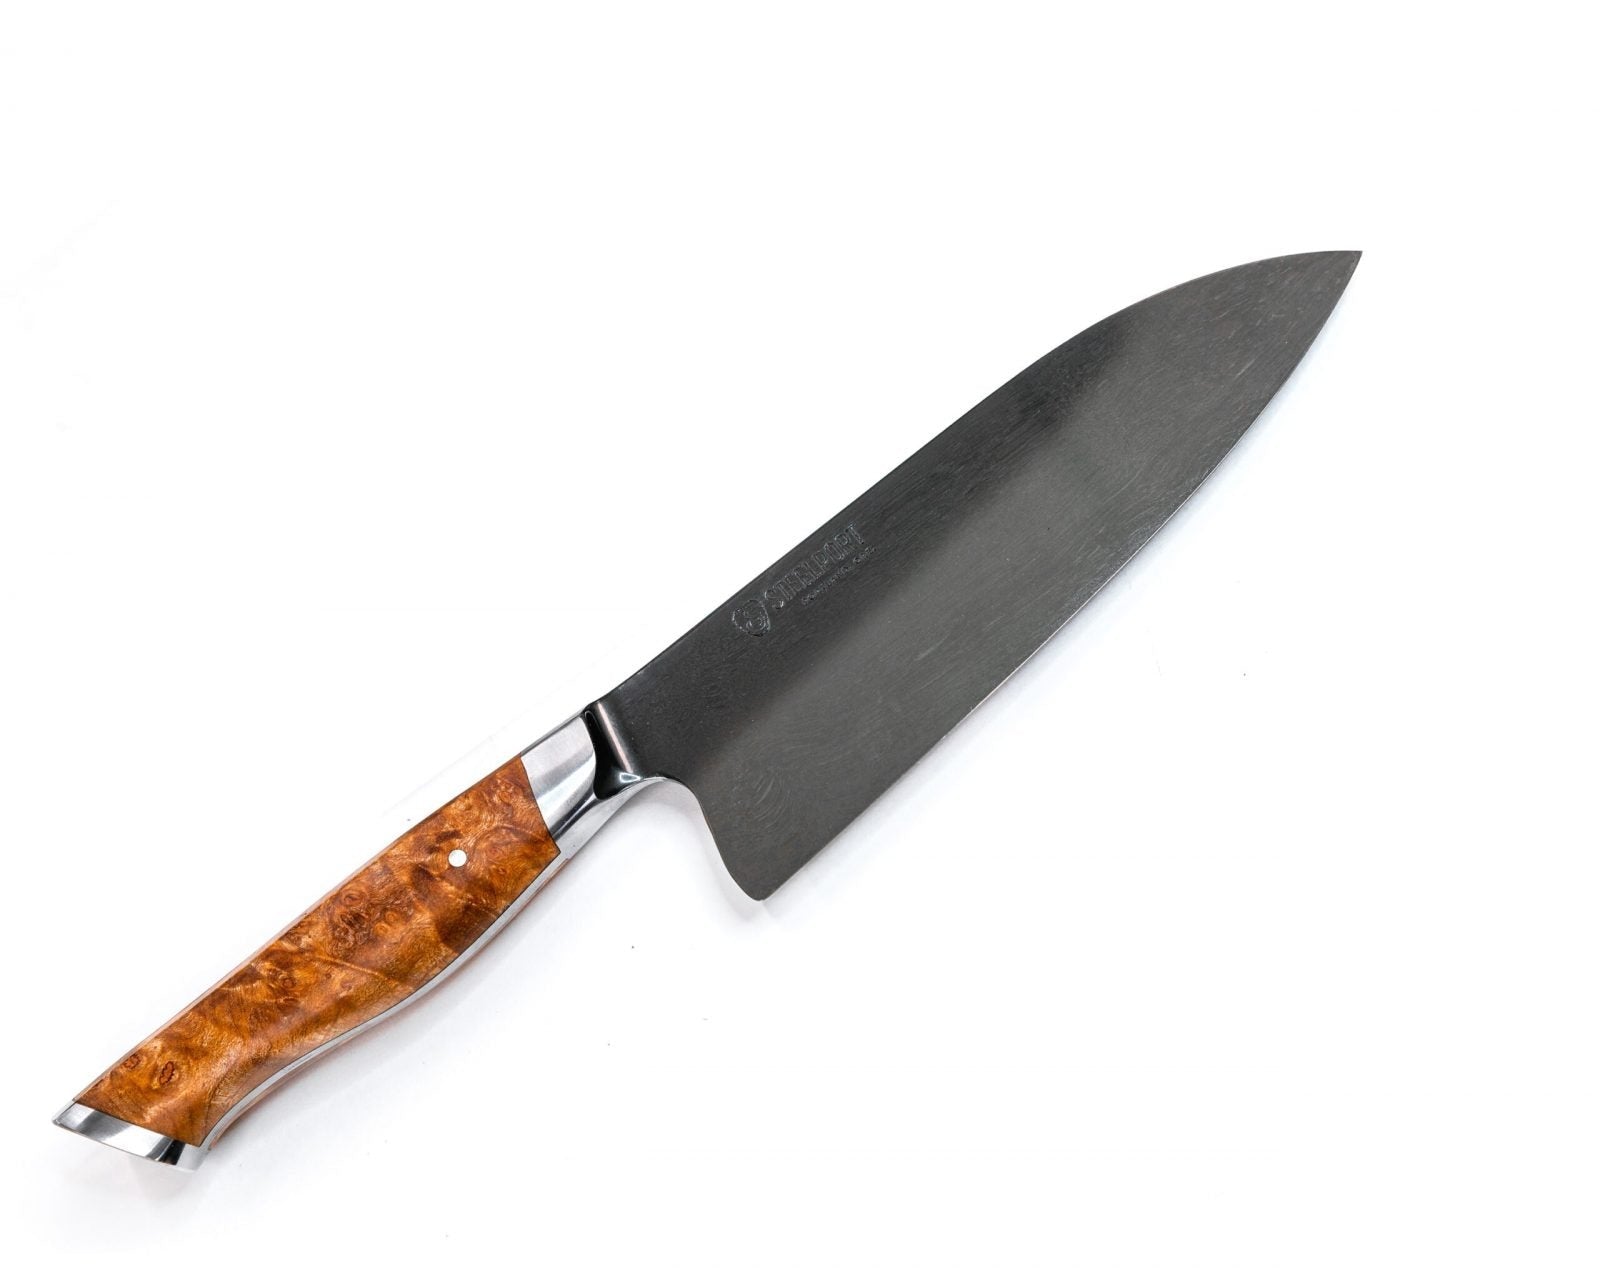 6 Boning Knife – Wellborn 2R Beef